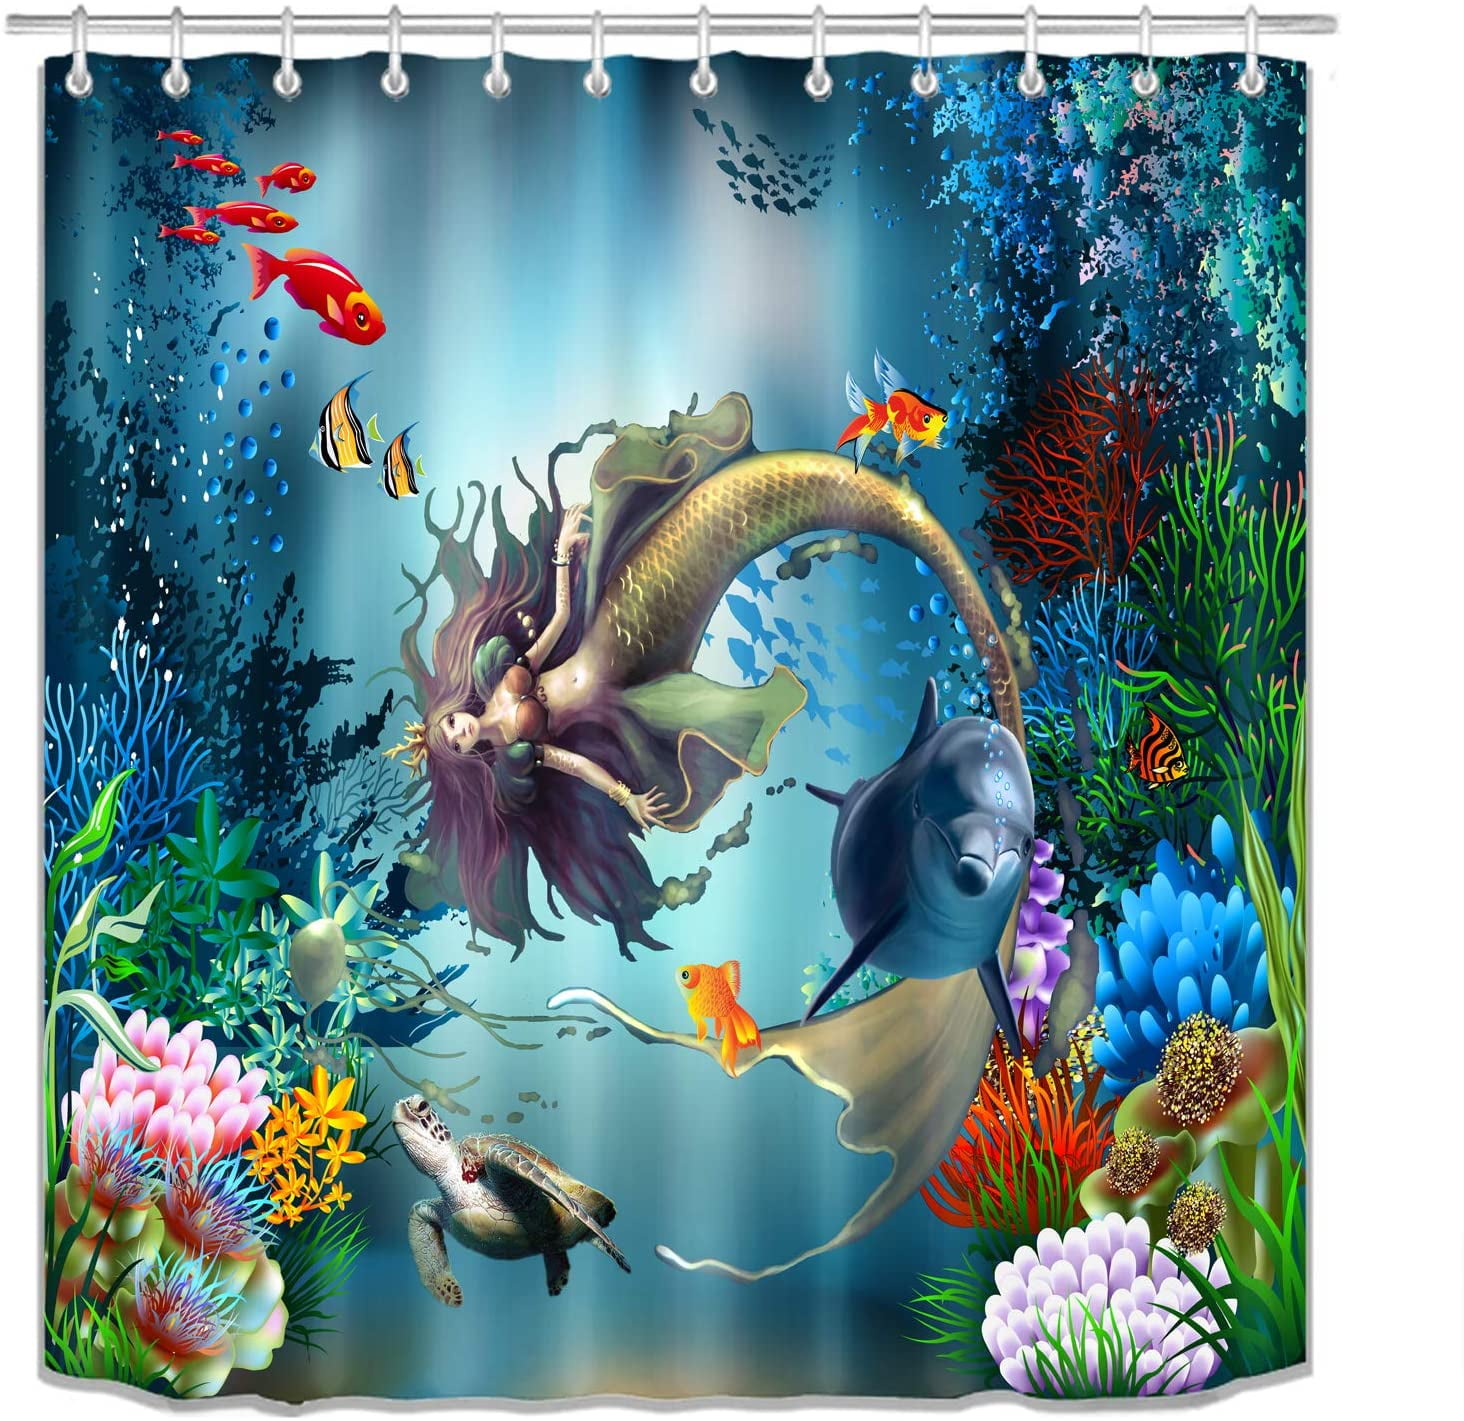 Underwater Mermaid Dolphin Shower Curtain Polyester Fabric Bathrooom Decor Hooks 